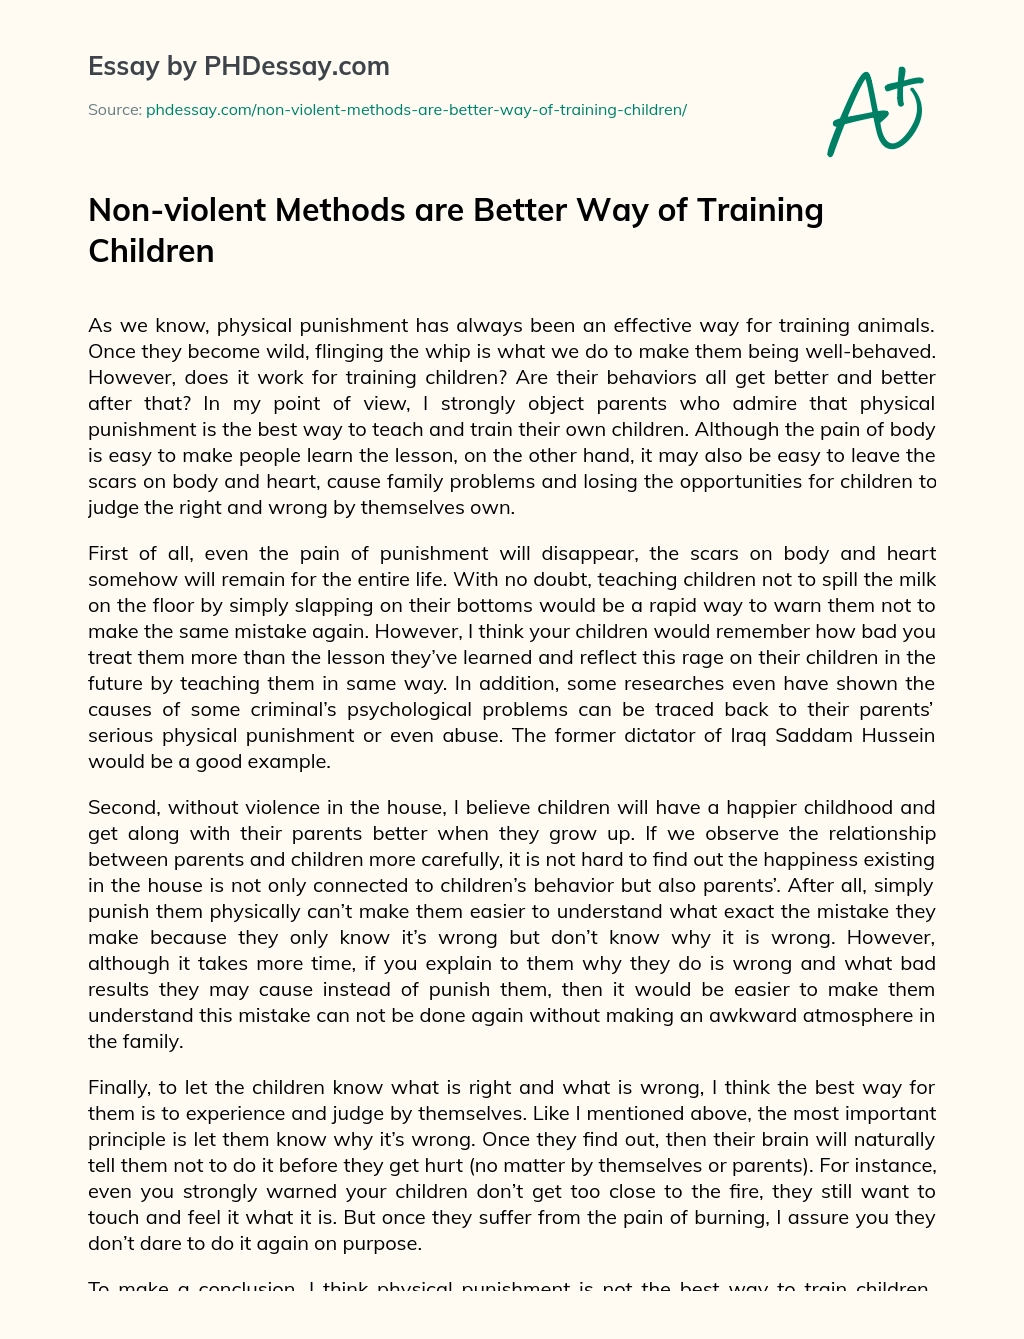 Non-violent Methods are Better Way of Training Children essay